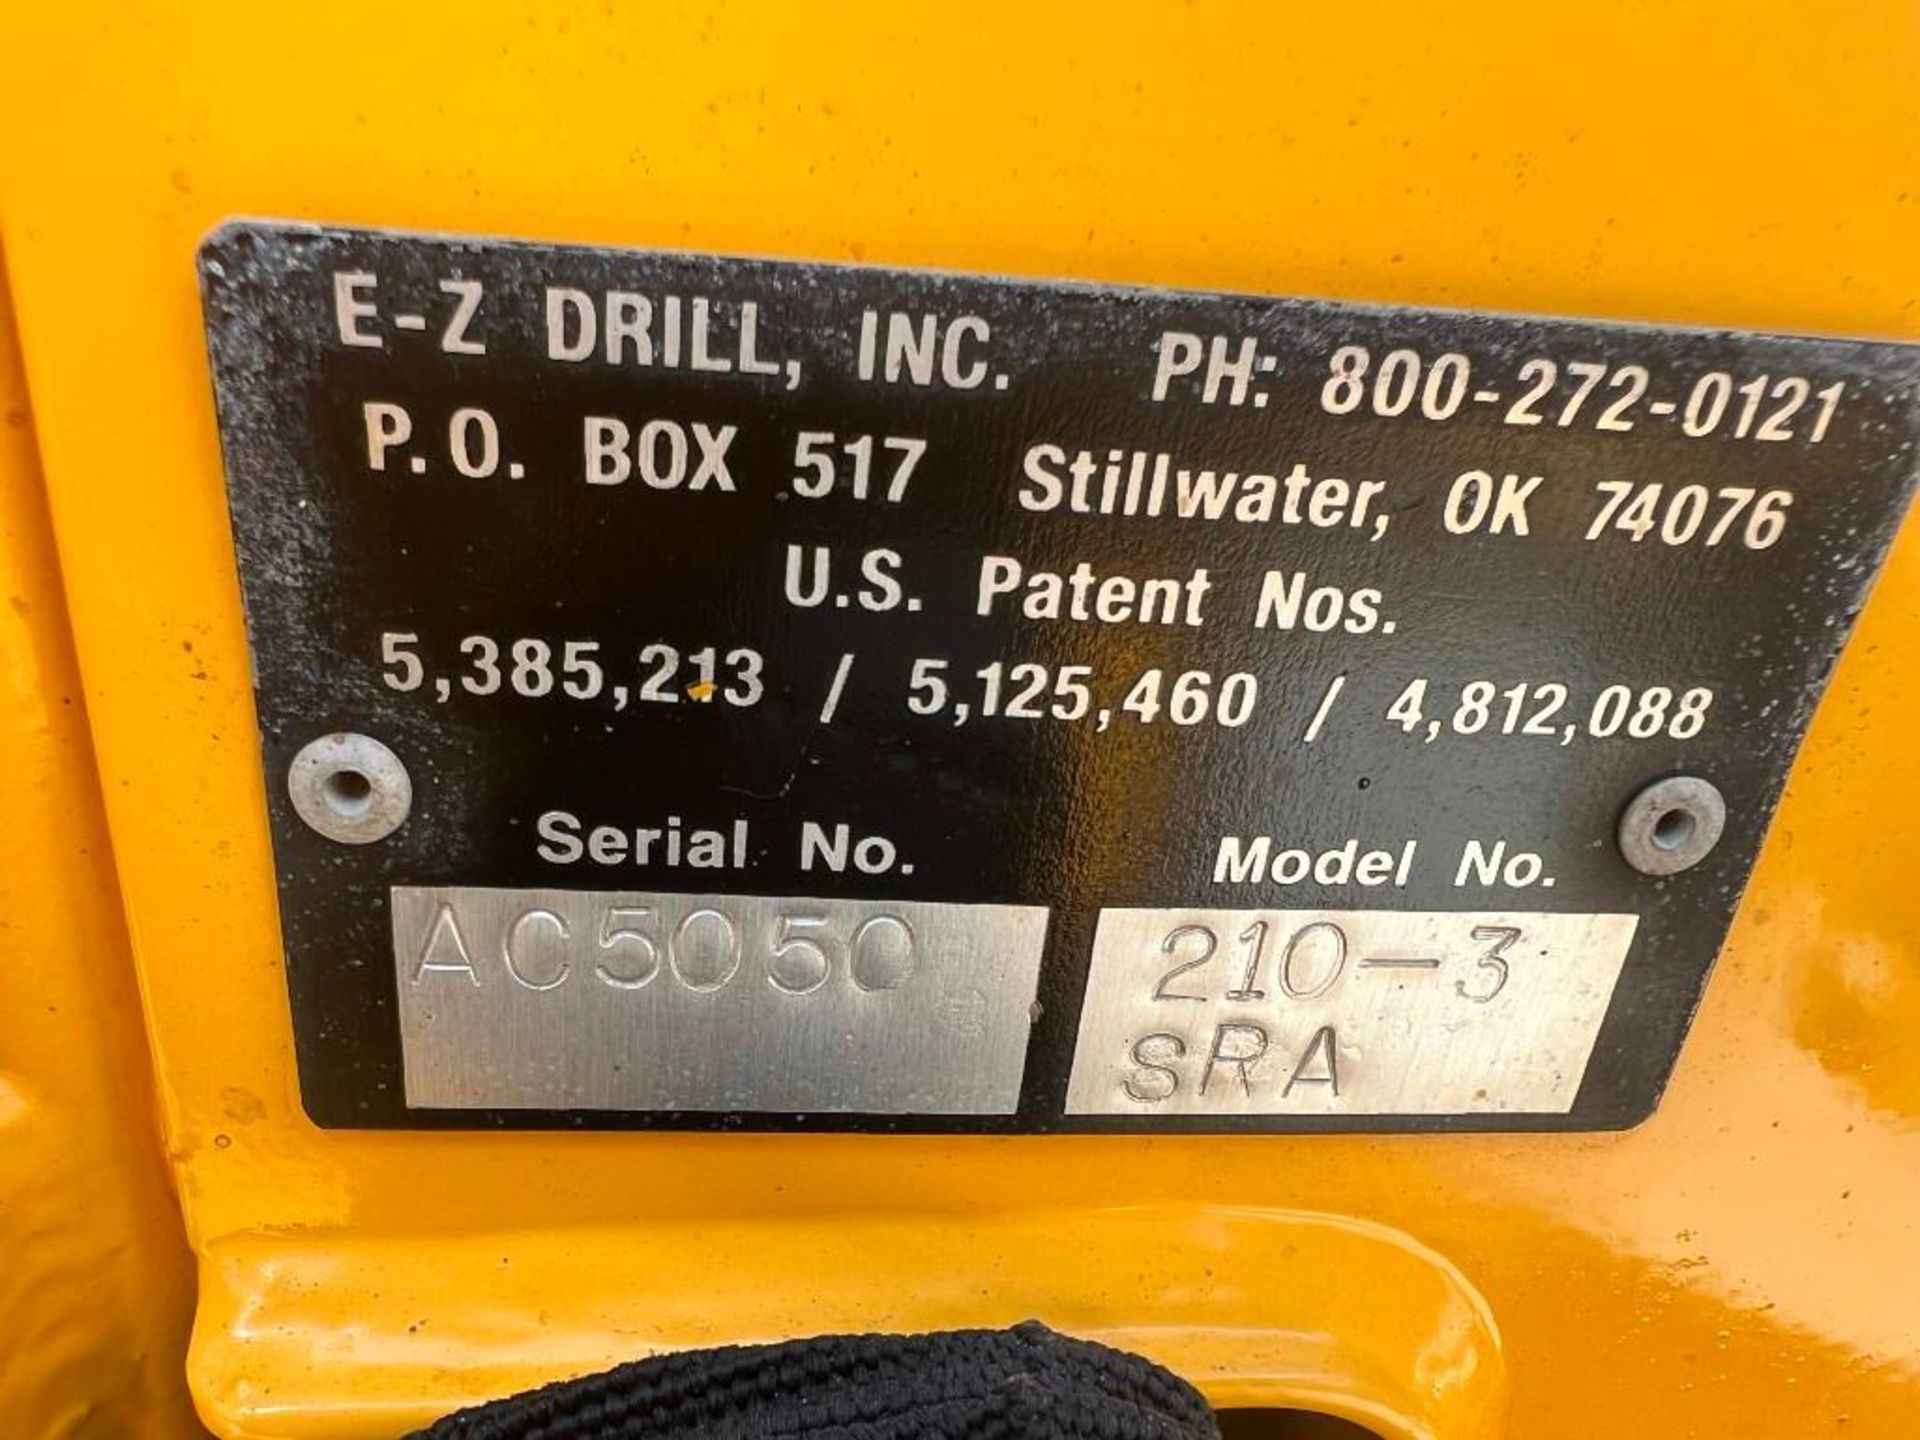 EZ Drills 210-3 SRA slab rider, located in Mt. Pleasant, IA. - Image 4 of 18